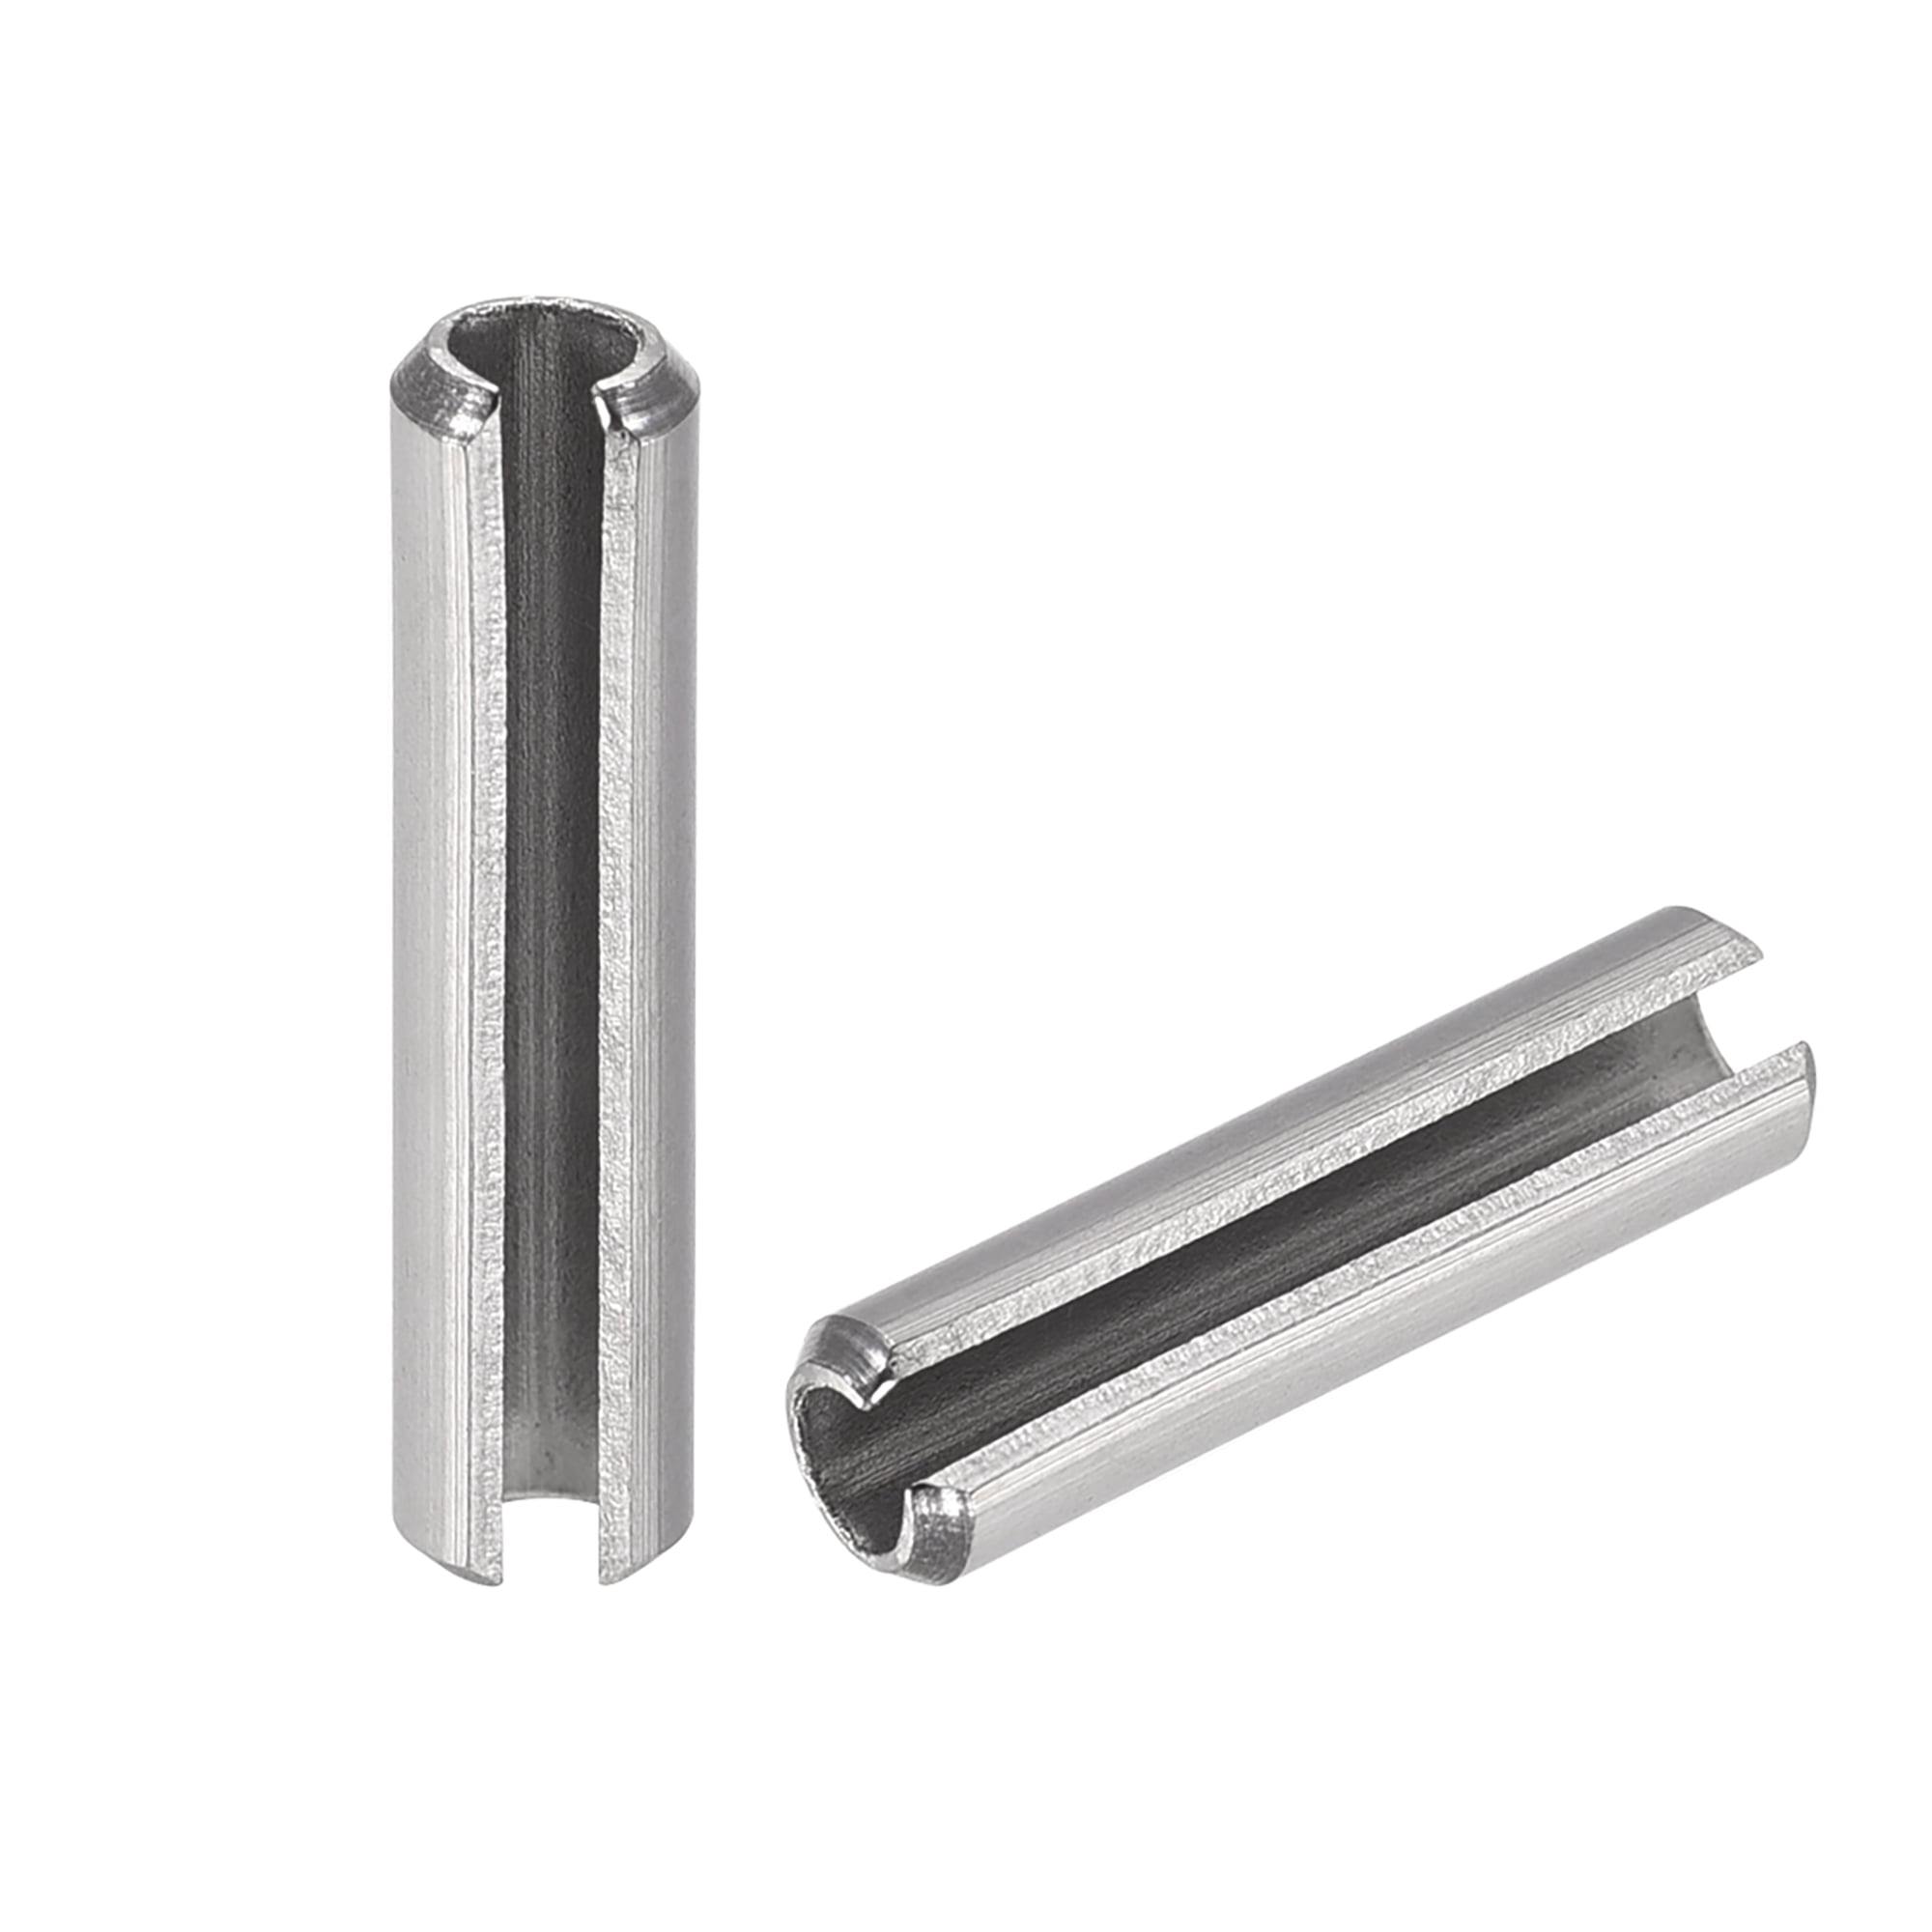 M8 x 50mm 304 Stainless Steel Split Spring Roll Dowel Pins Plain Finish 5Pcs